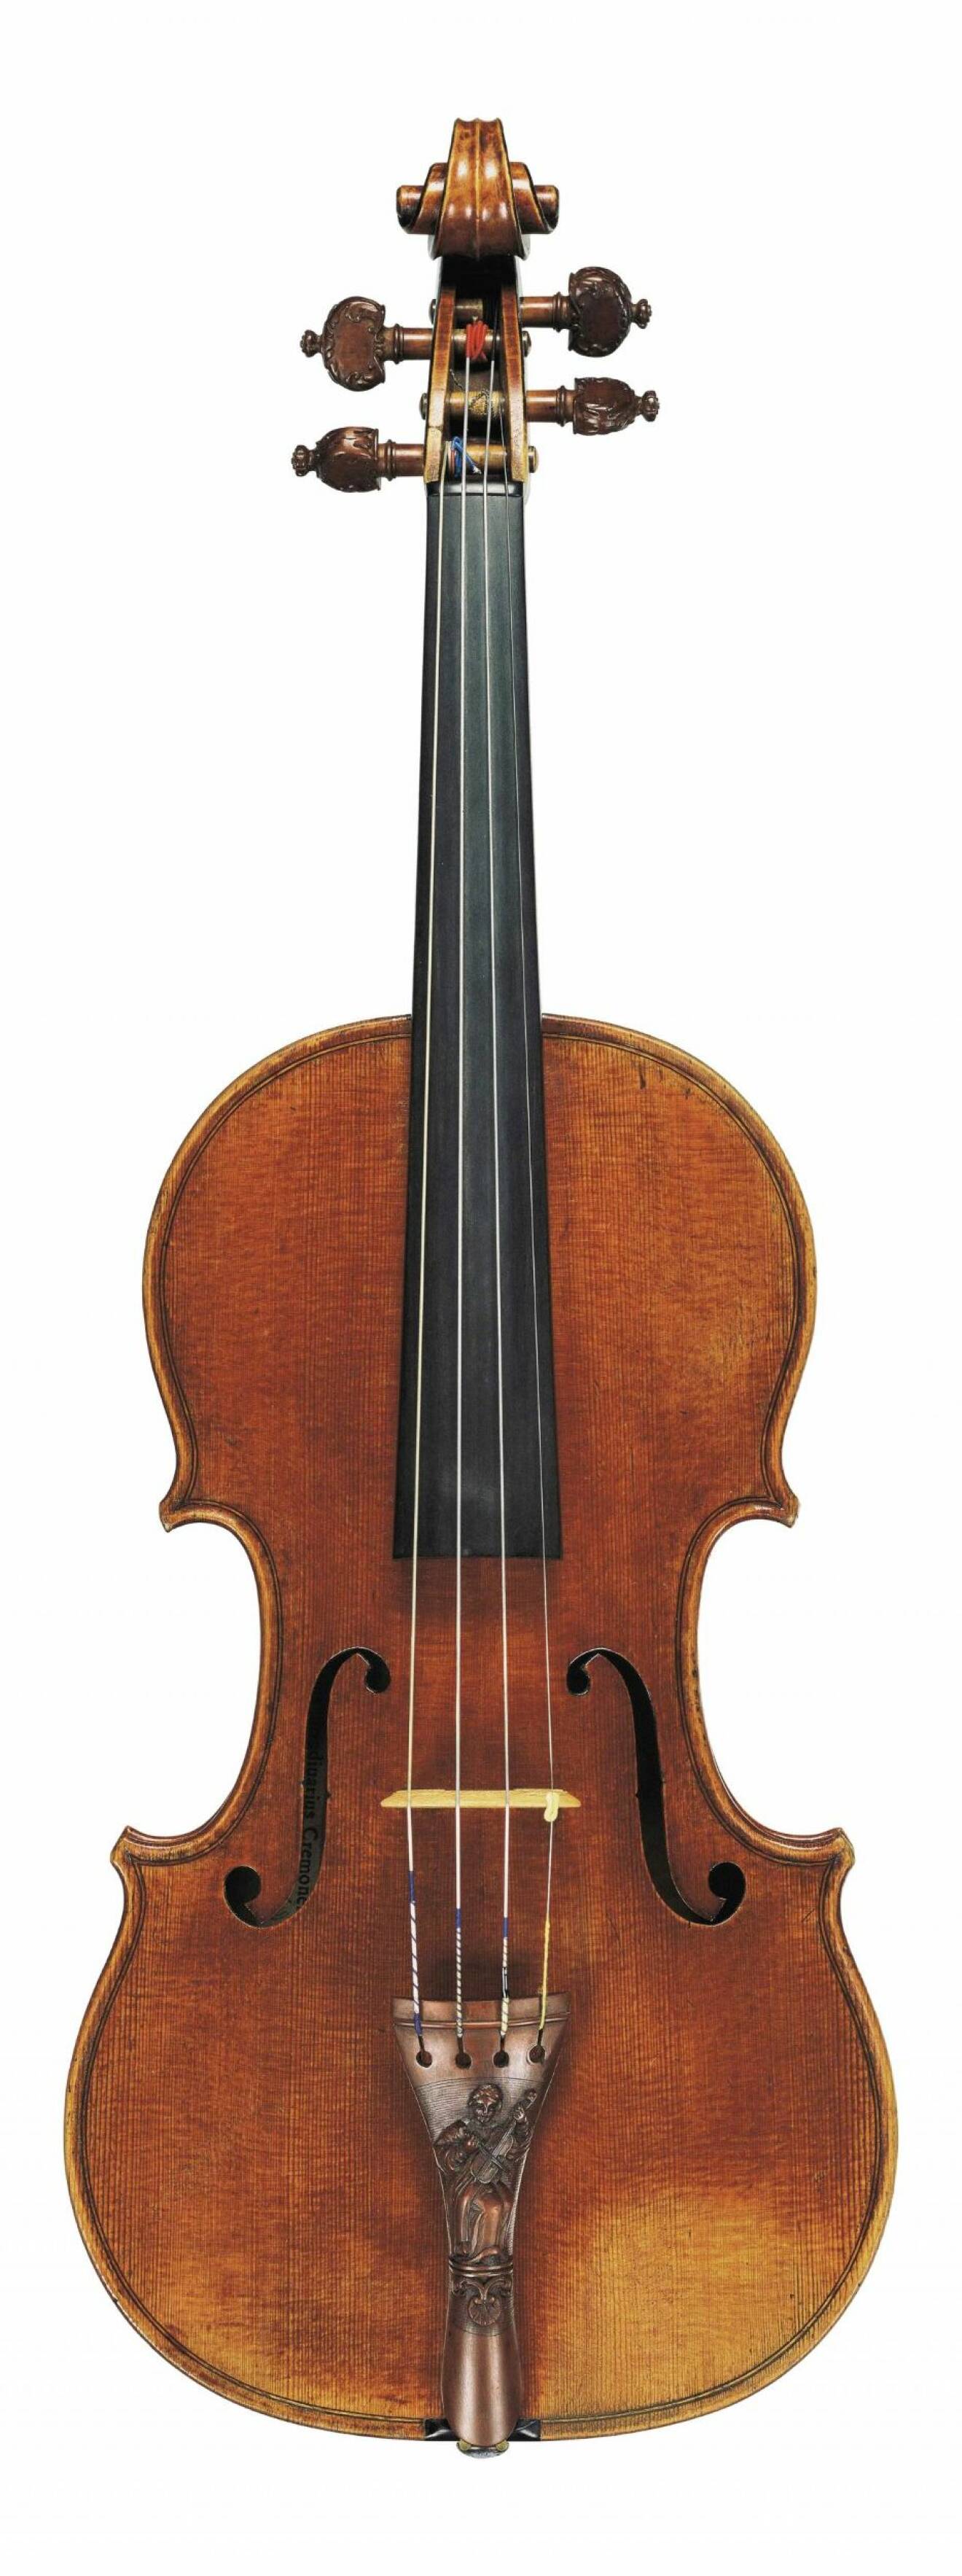 Lady Blunt av Antonio Stradivarius.